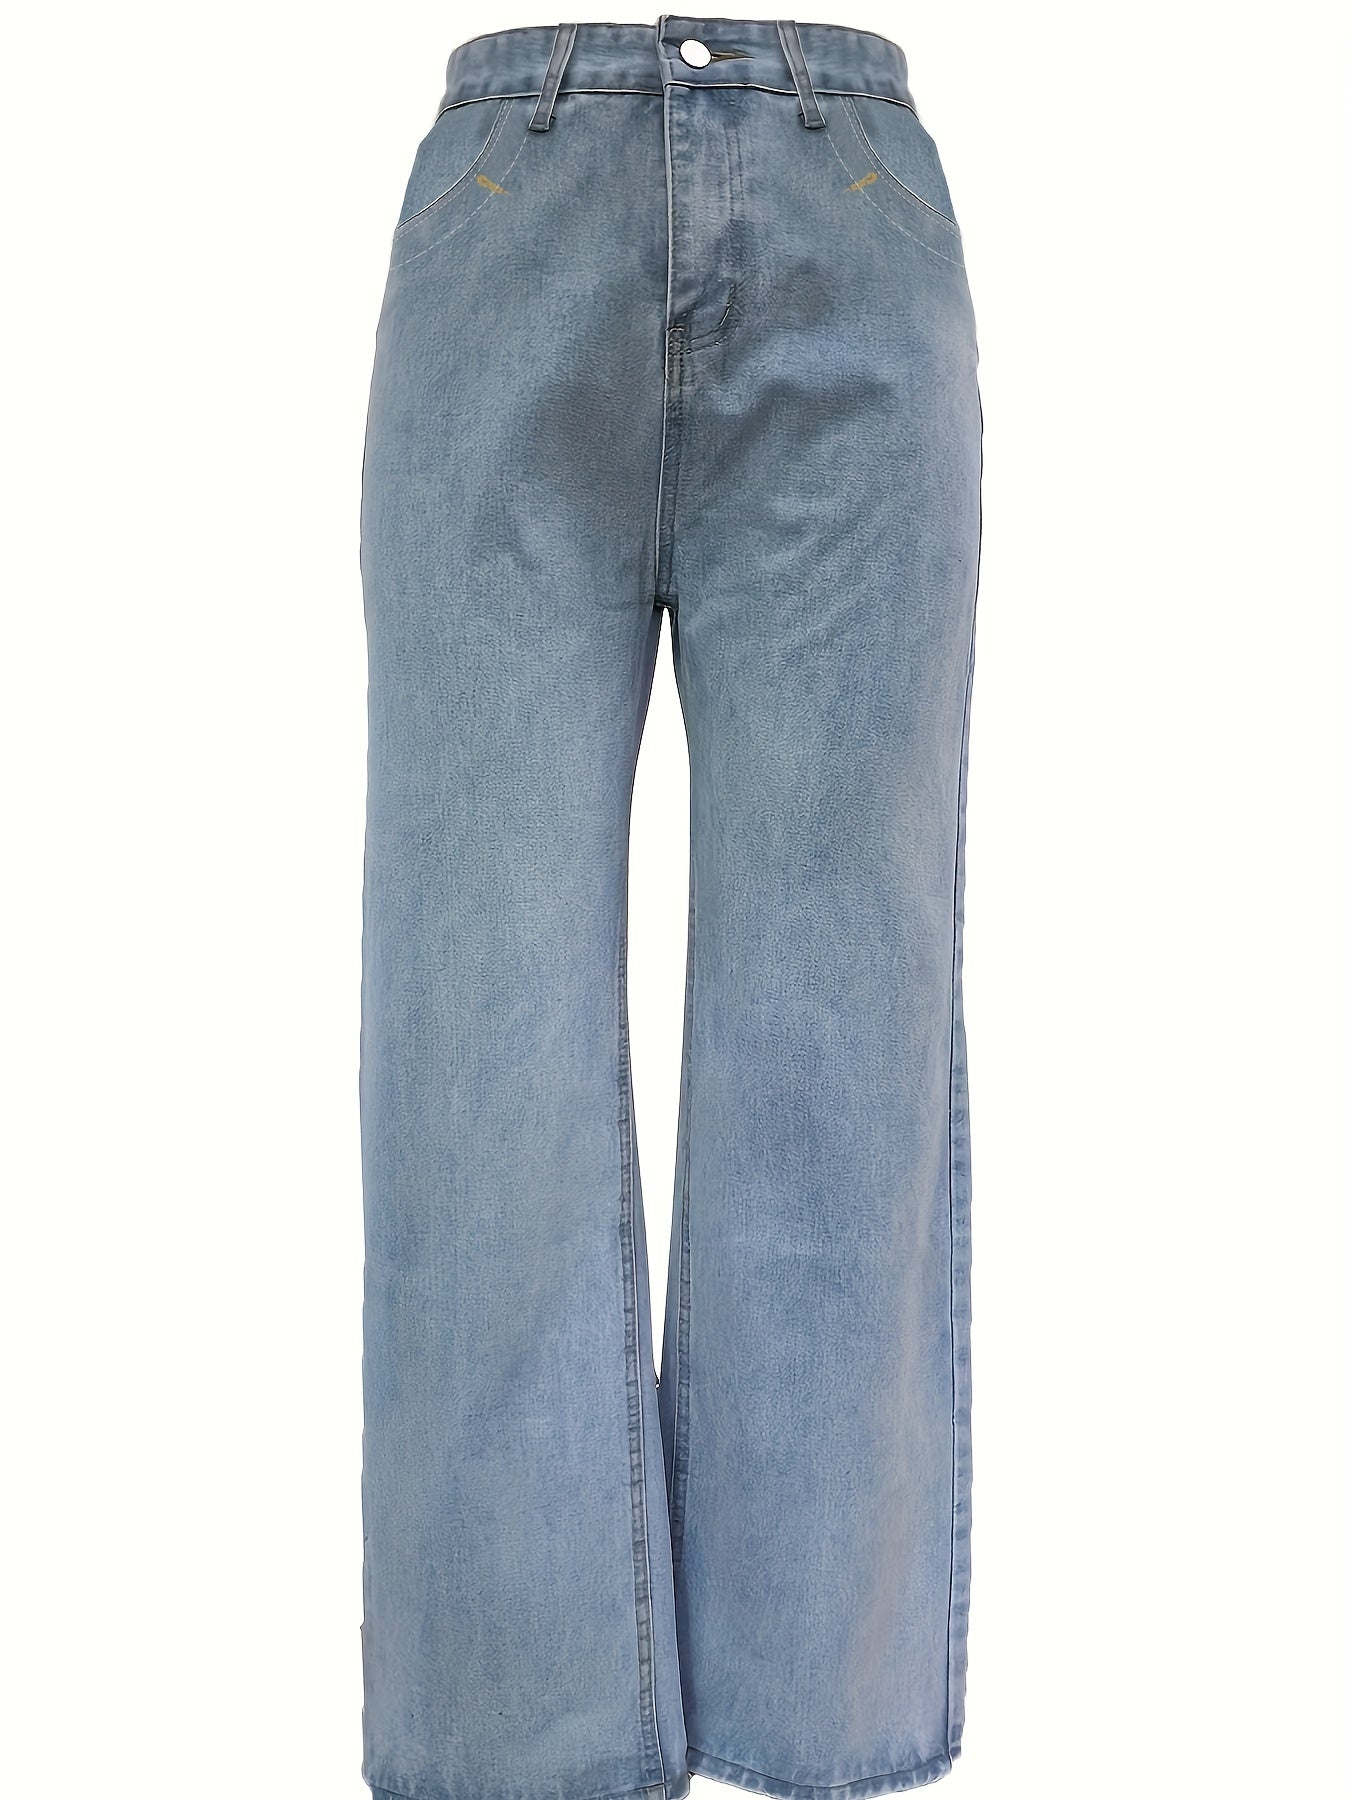 「lovevop」Solid Loose Fit Straight Jeans, Non-Stretch Slash Pockets Baggy Denim Pants, Women's Denim Jeans & Clothing